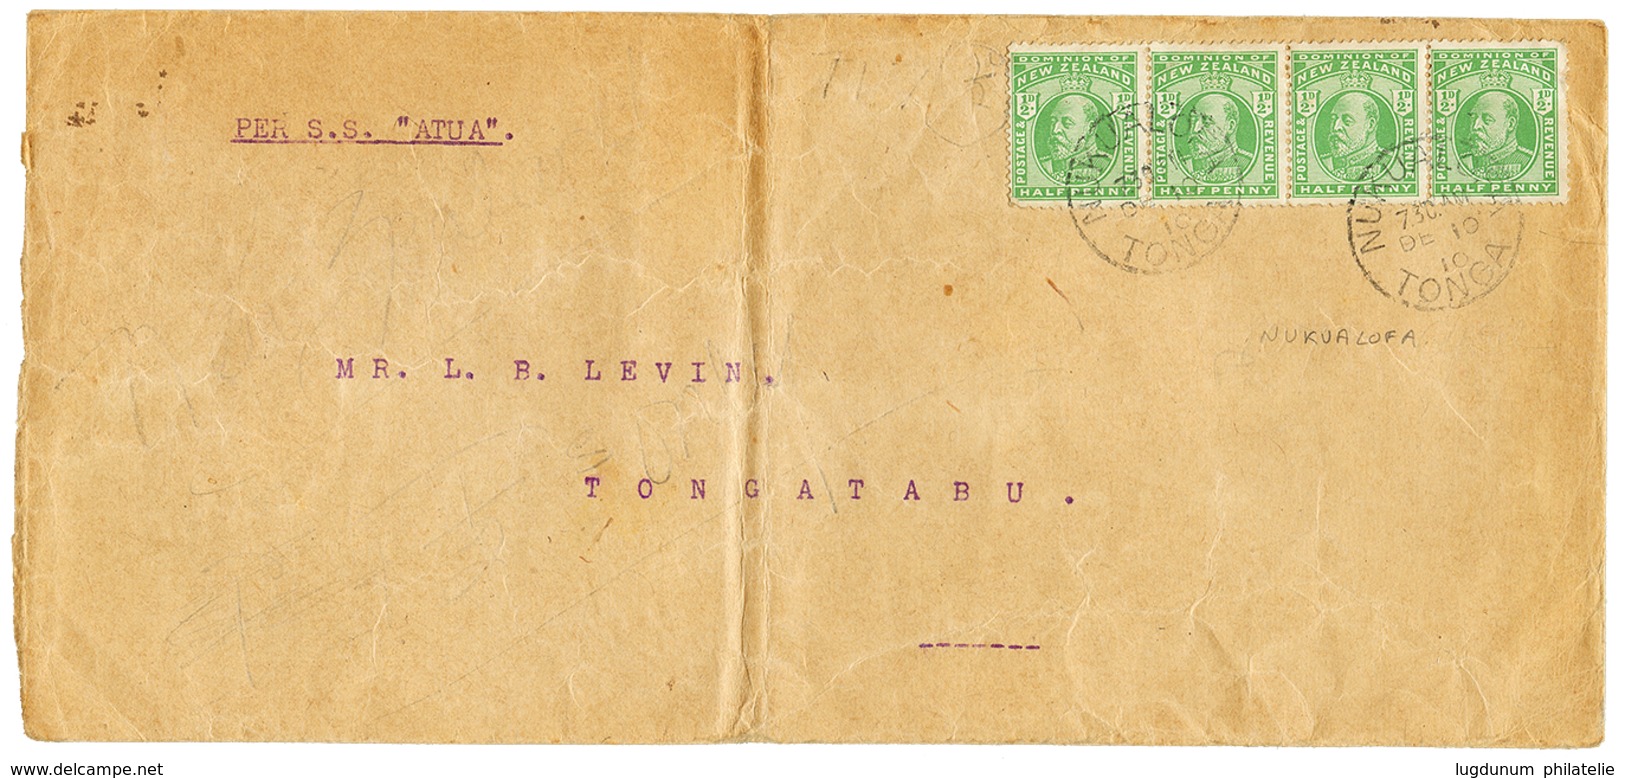 1351 1910 NEW ZEALAND 1/2d(x4) Canc. NUKUALOFA TONGA + "S.S ATUA" On Envelope To TONGATABU. Scarce. Vf. - Tonga (...-1970)